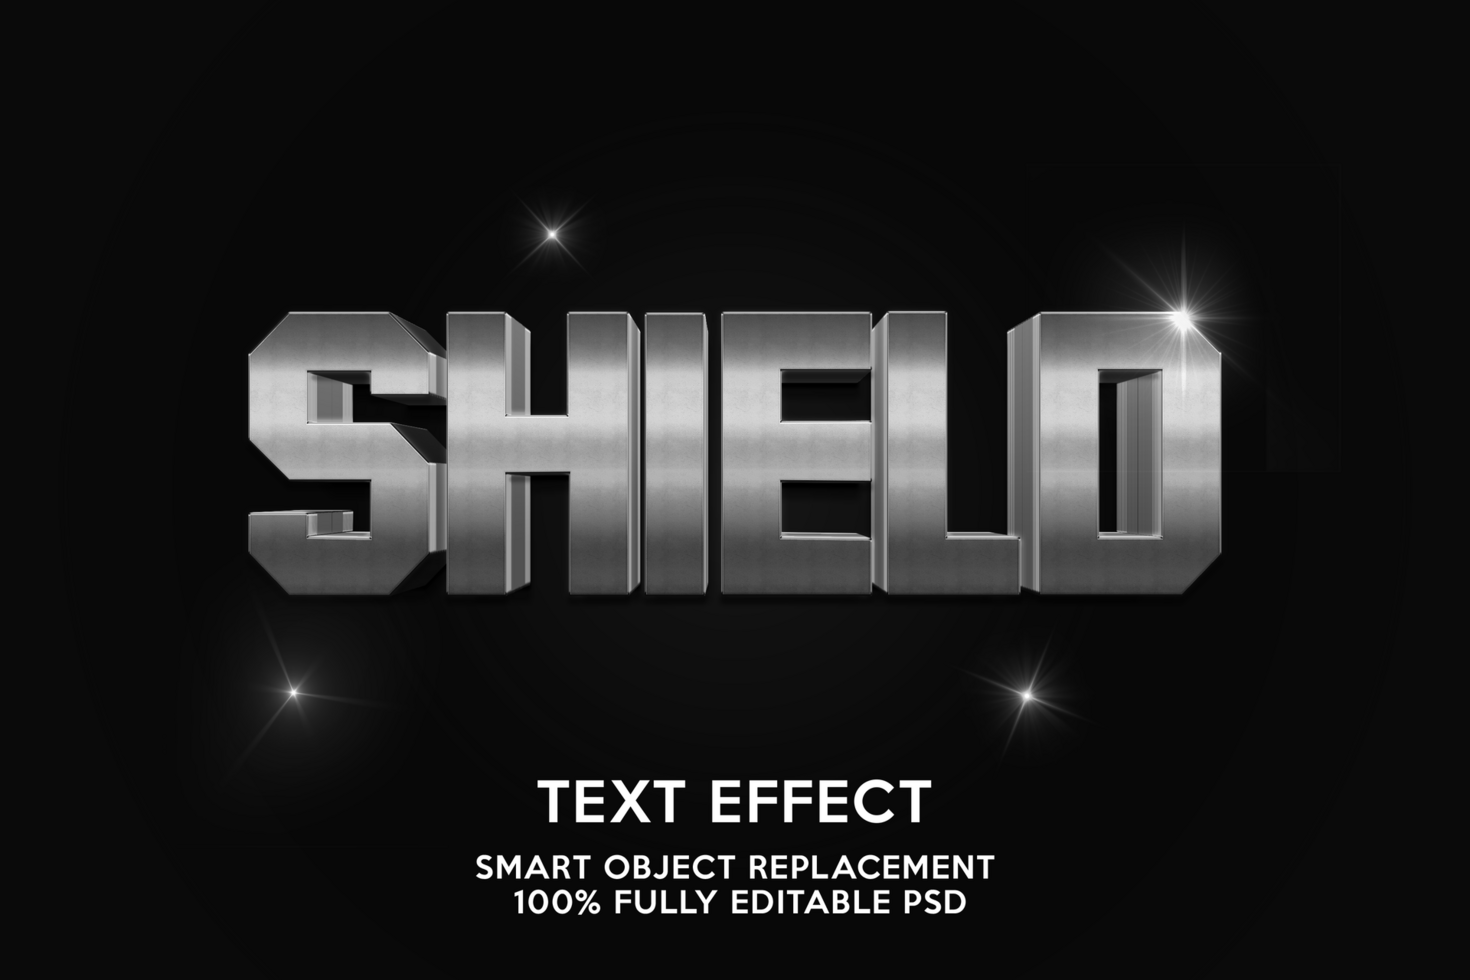 shield text effect template psd